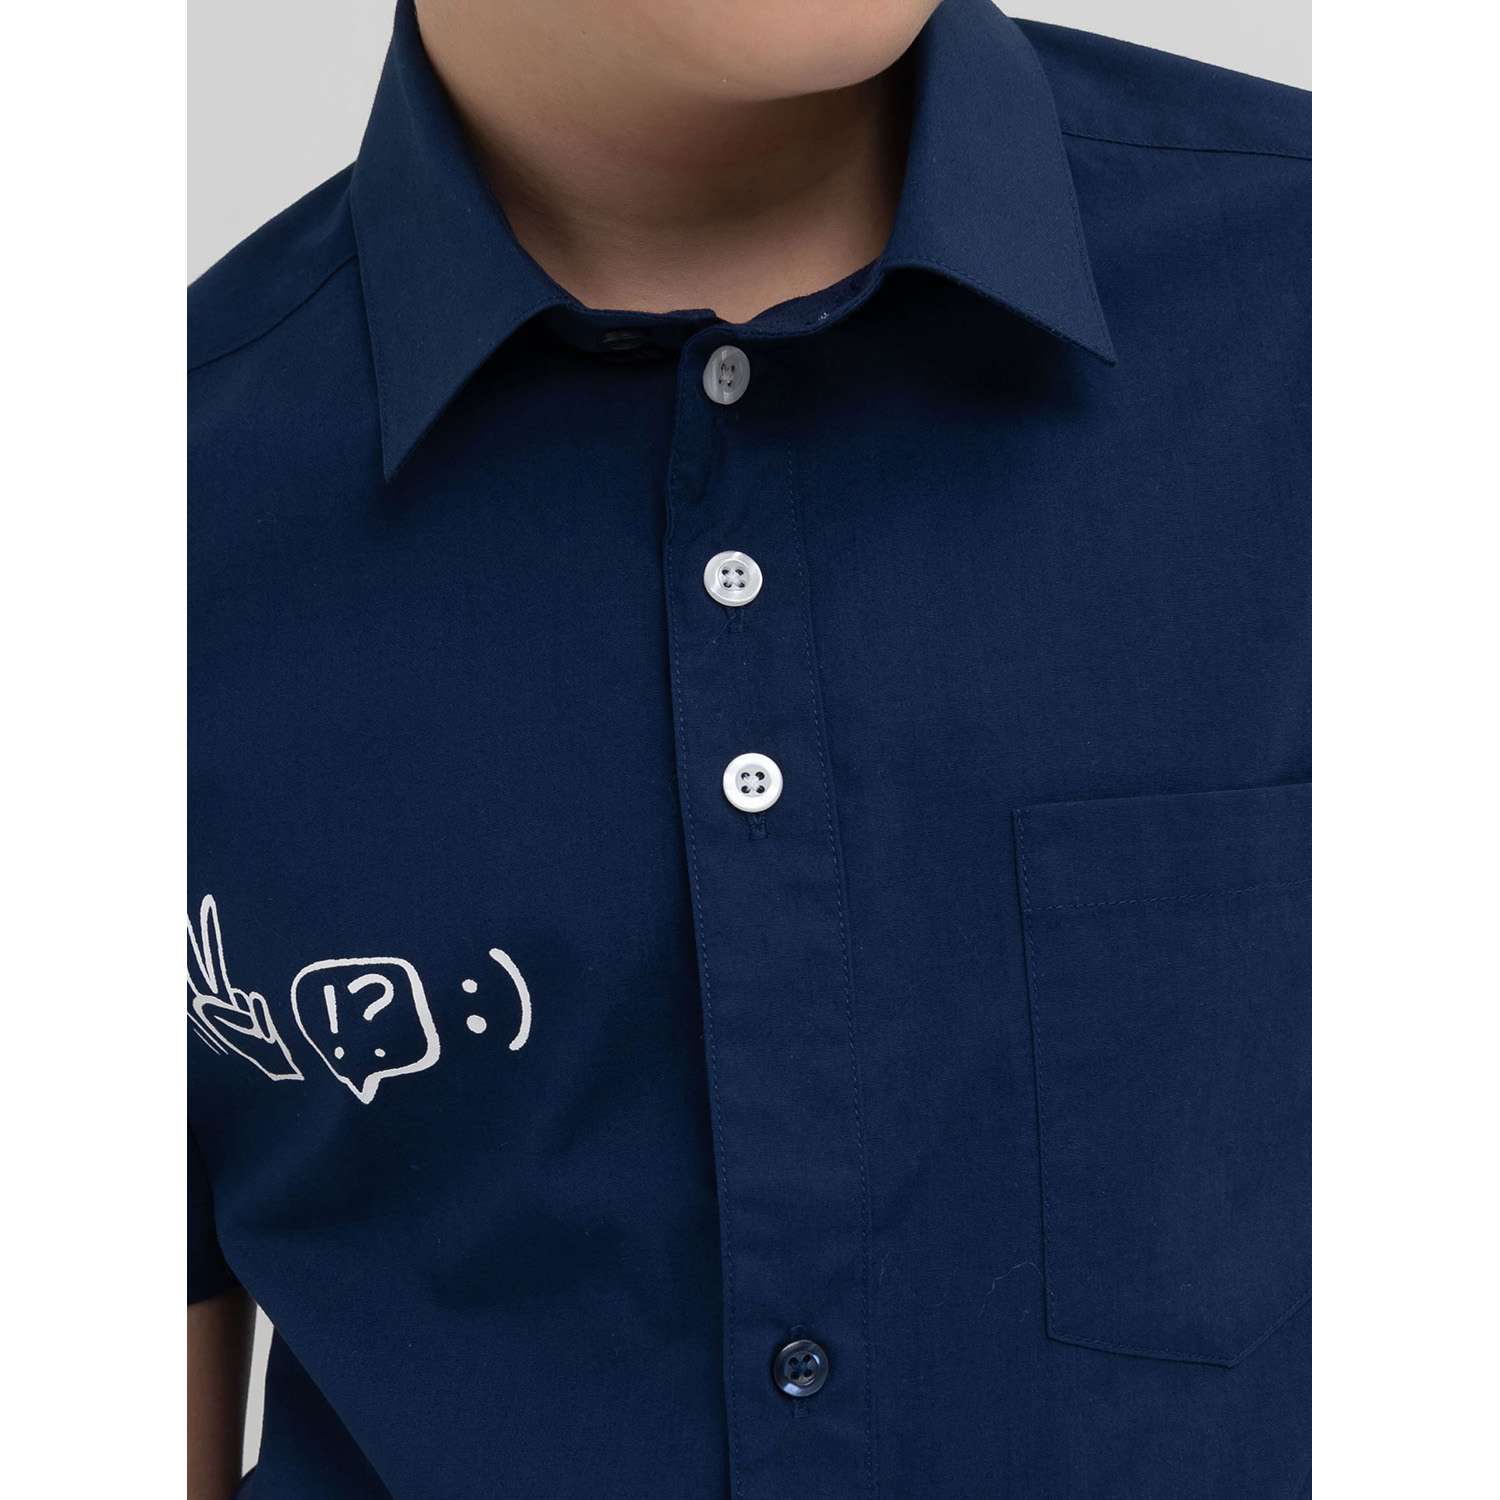 Рубашка PELICAN BWCT8107/Темно-синий(54) - фото 2